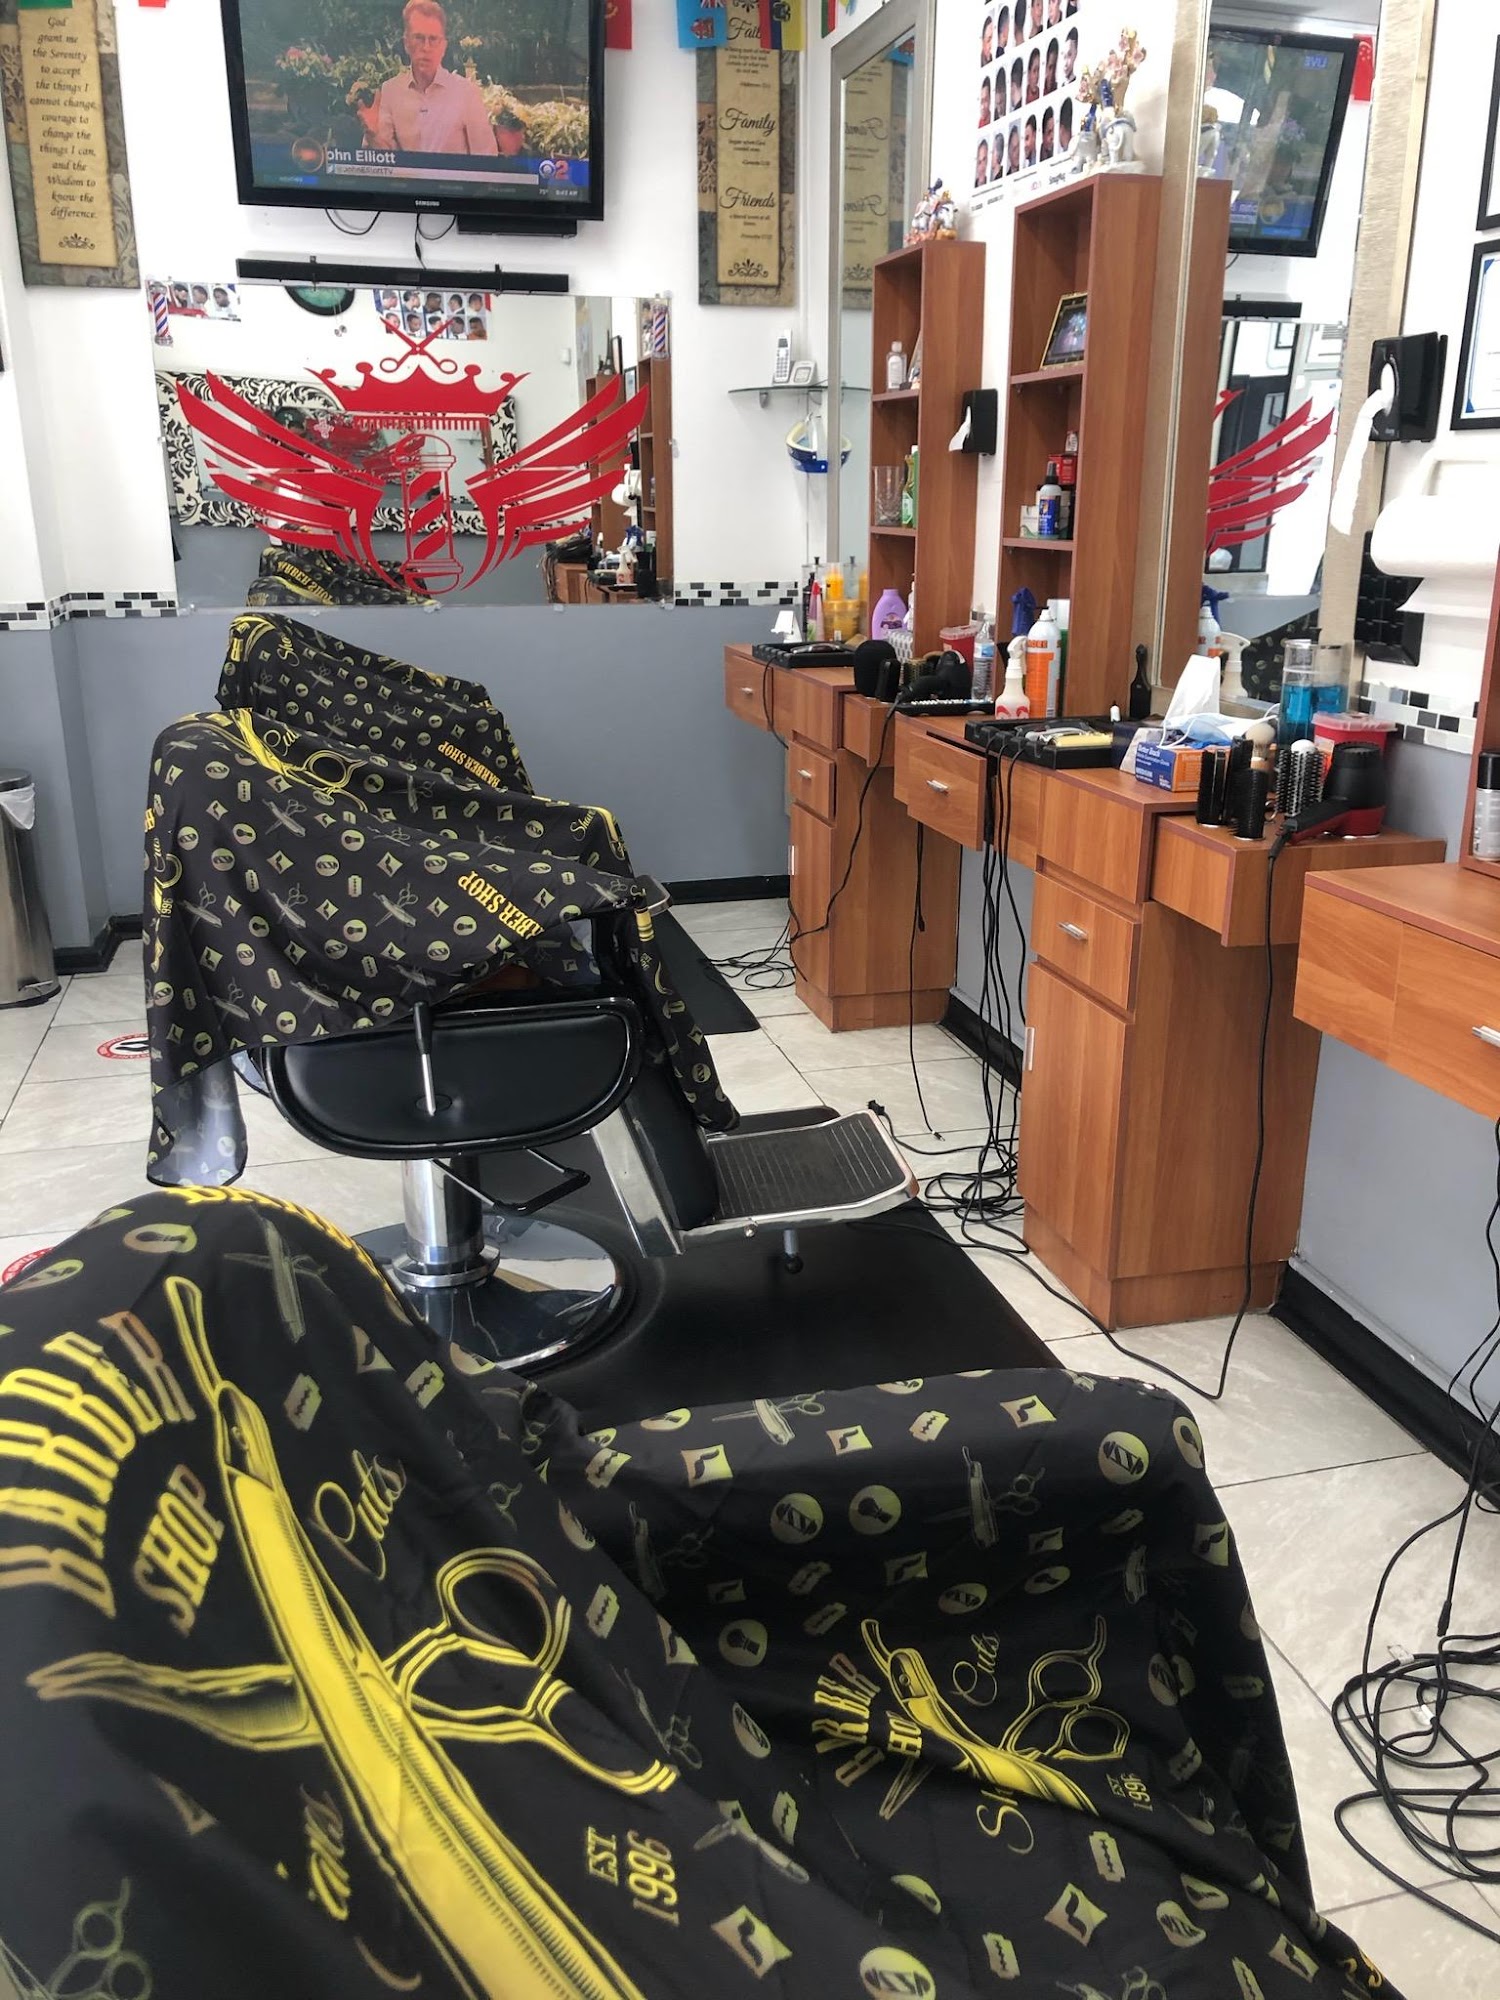 Benjie S Pro Cuts Barbershop